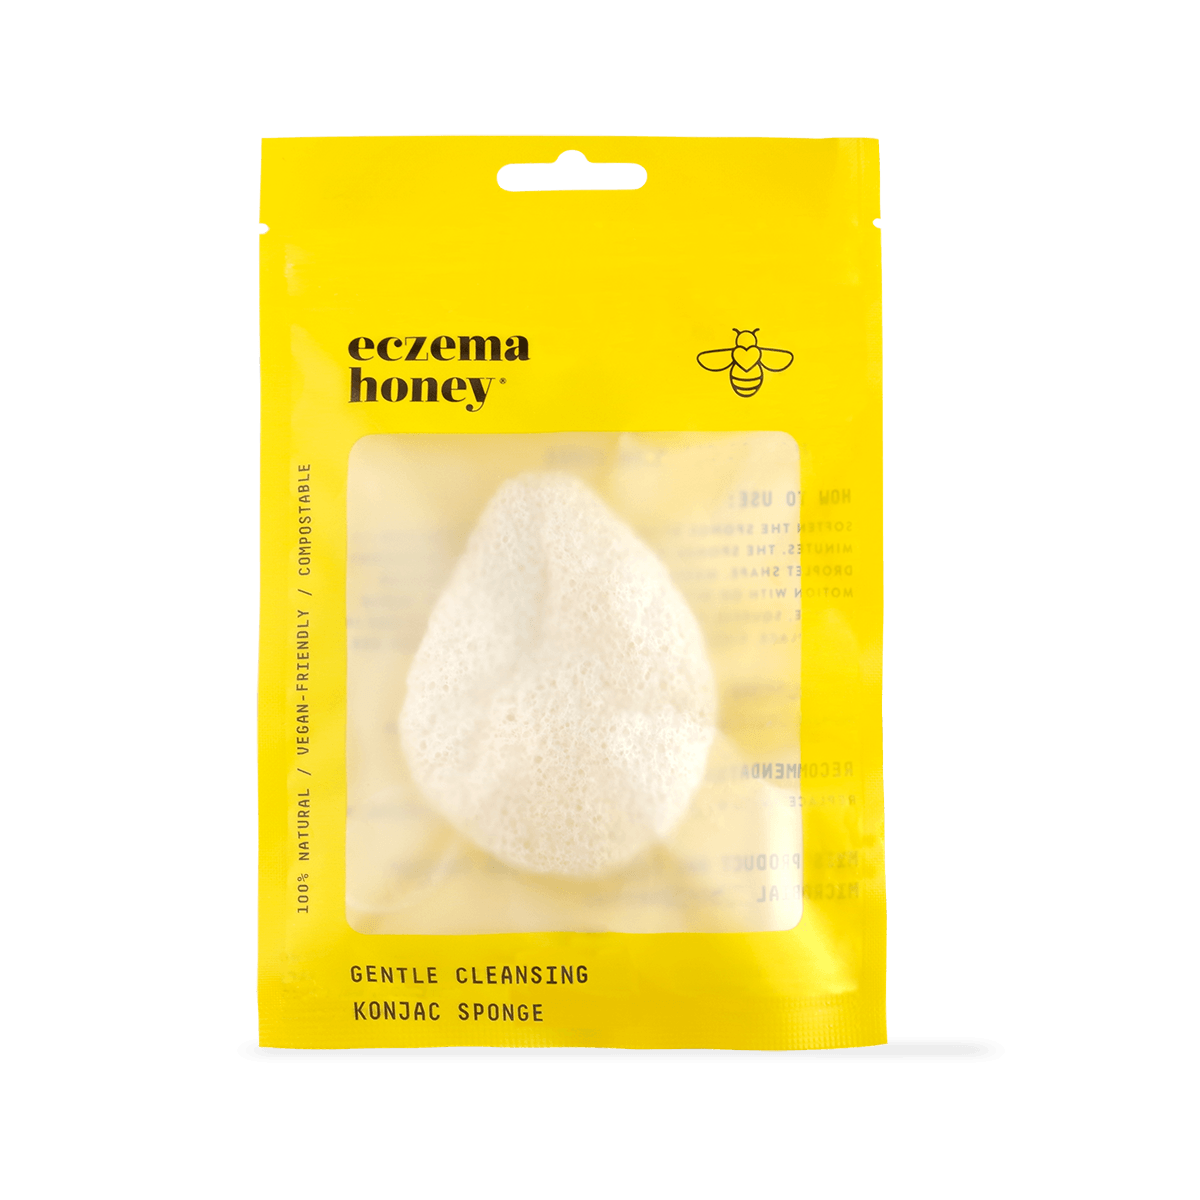 Eczema Honey Gentle Cleansing Konjac Sponge